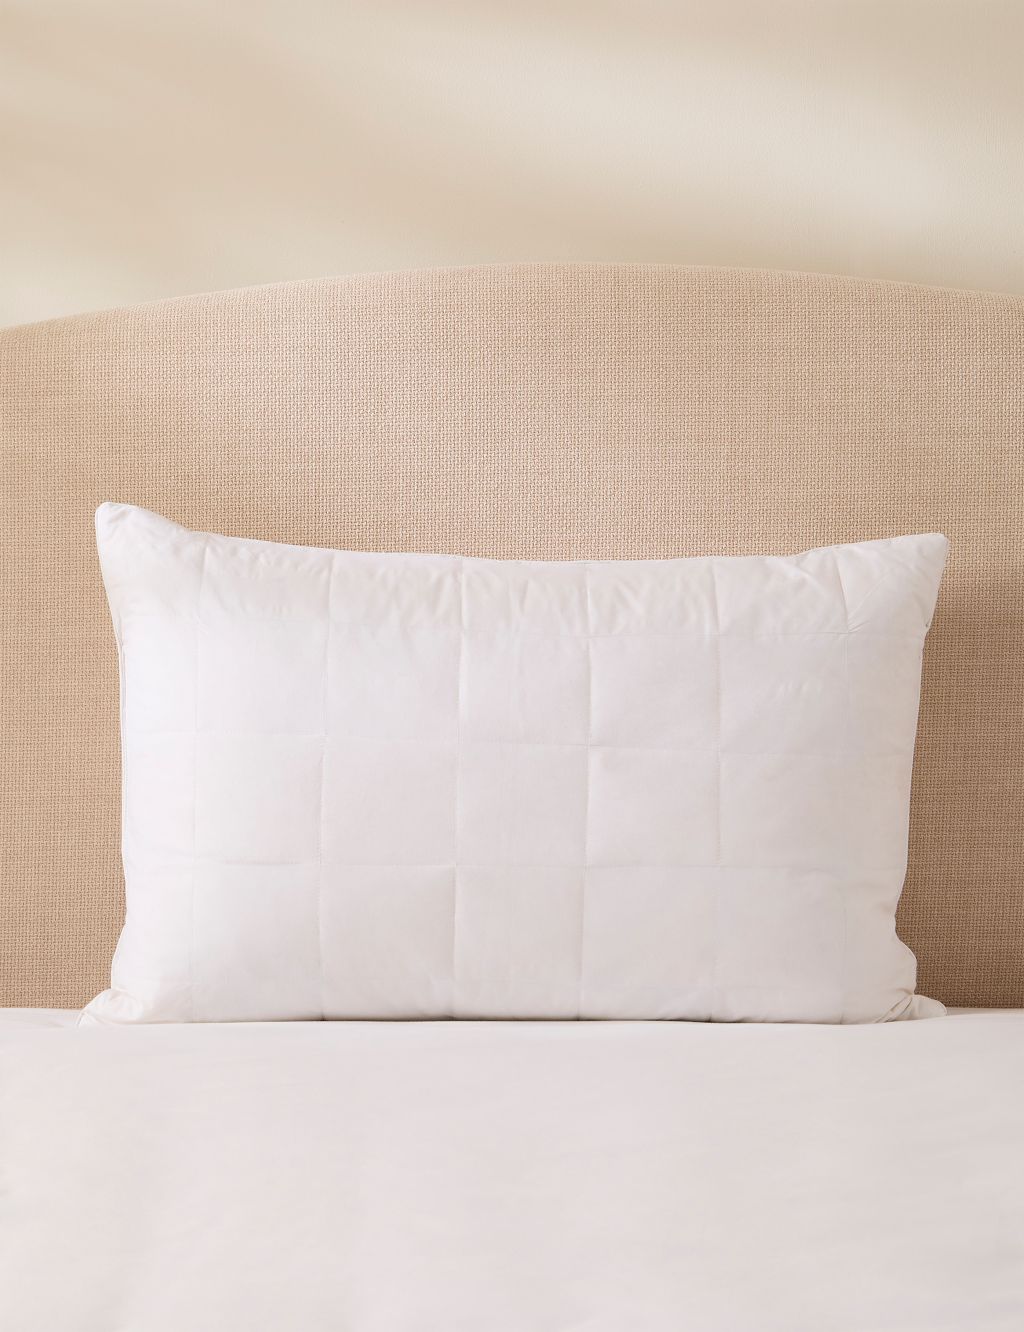 Sleep Solutions Goose Down Medium Surround Pillow image 4